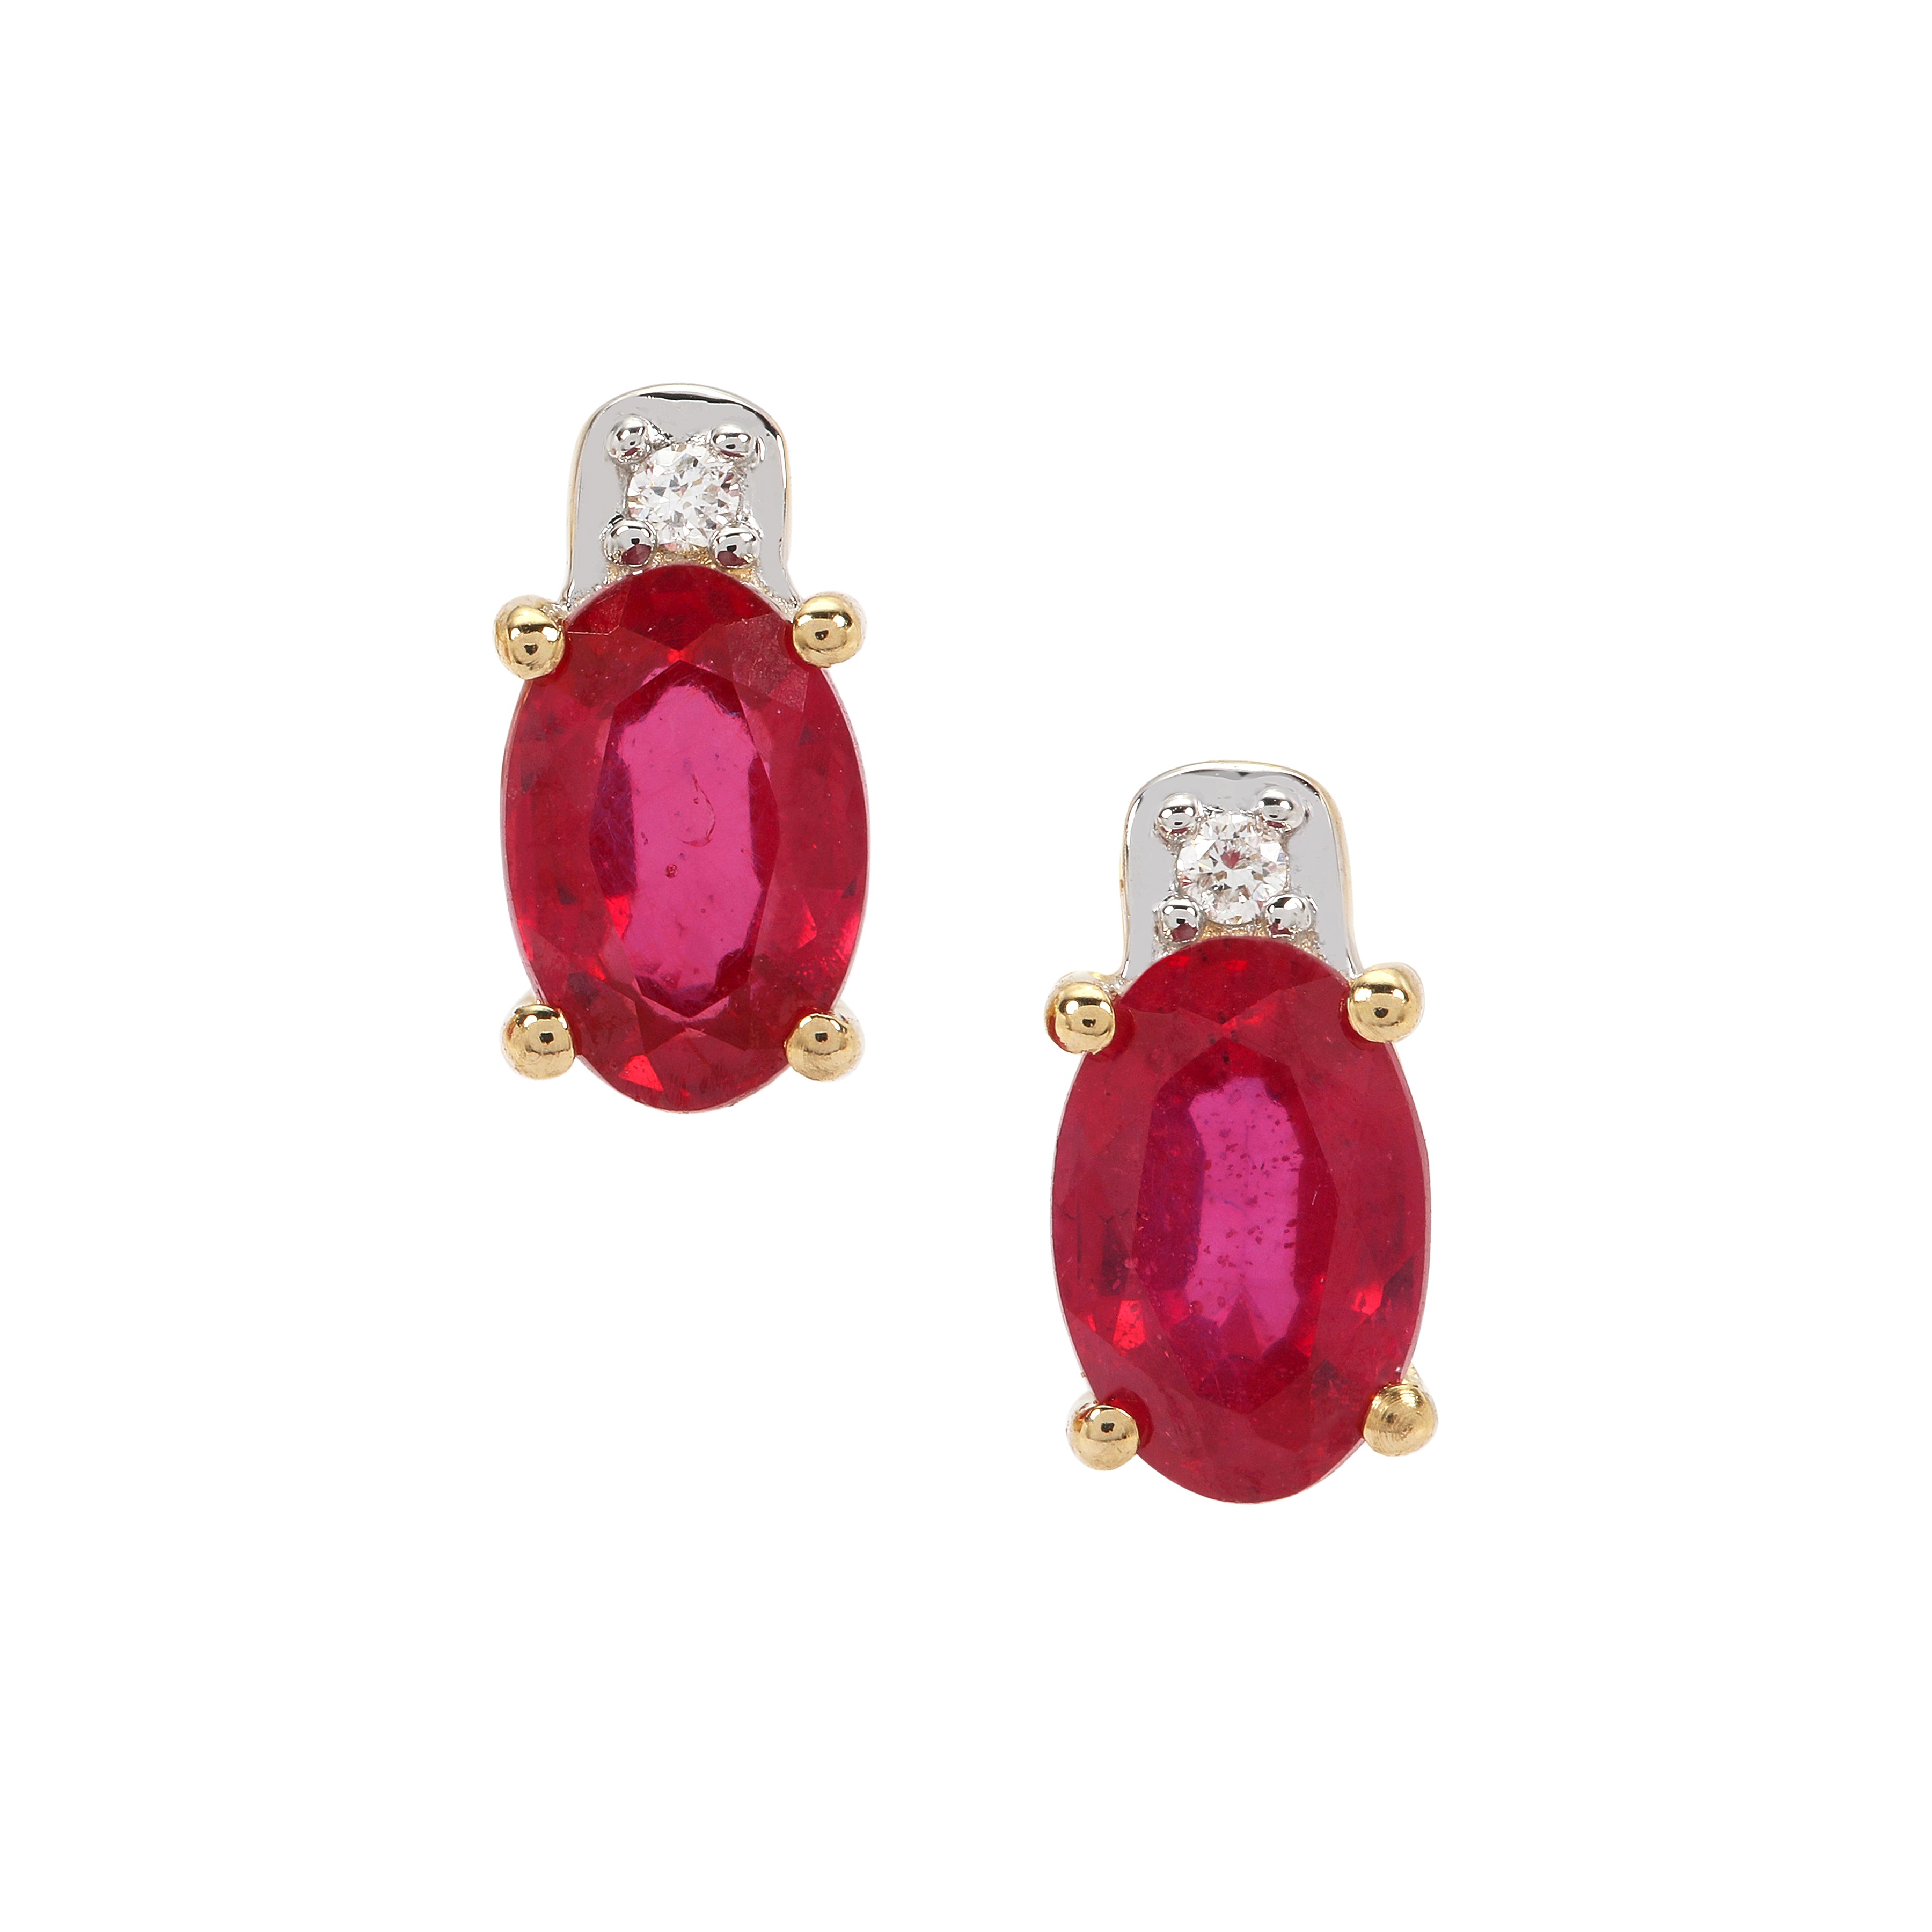 Share more than 181 jarkan stone earrings latest